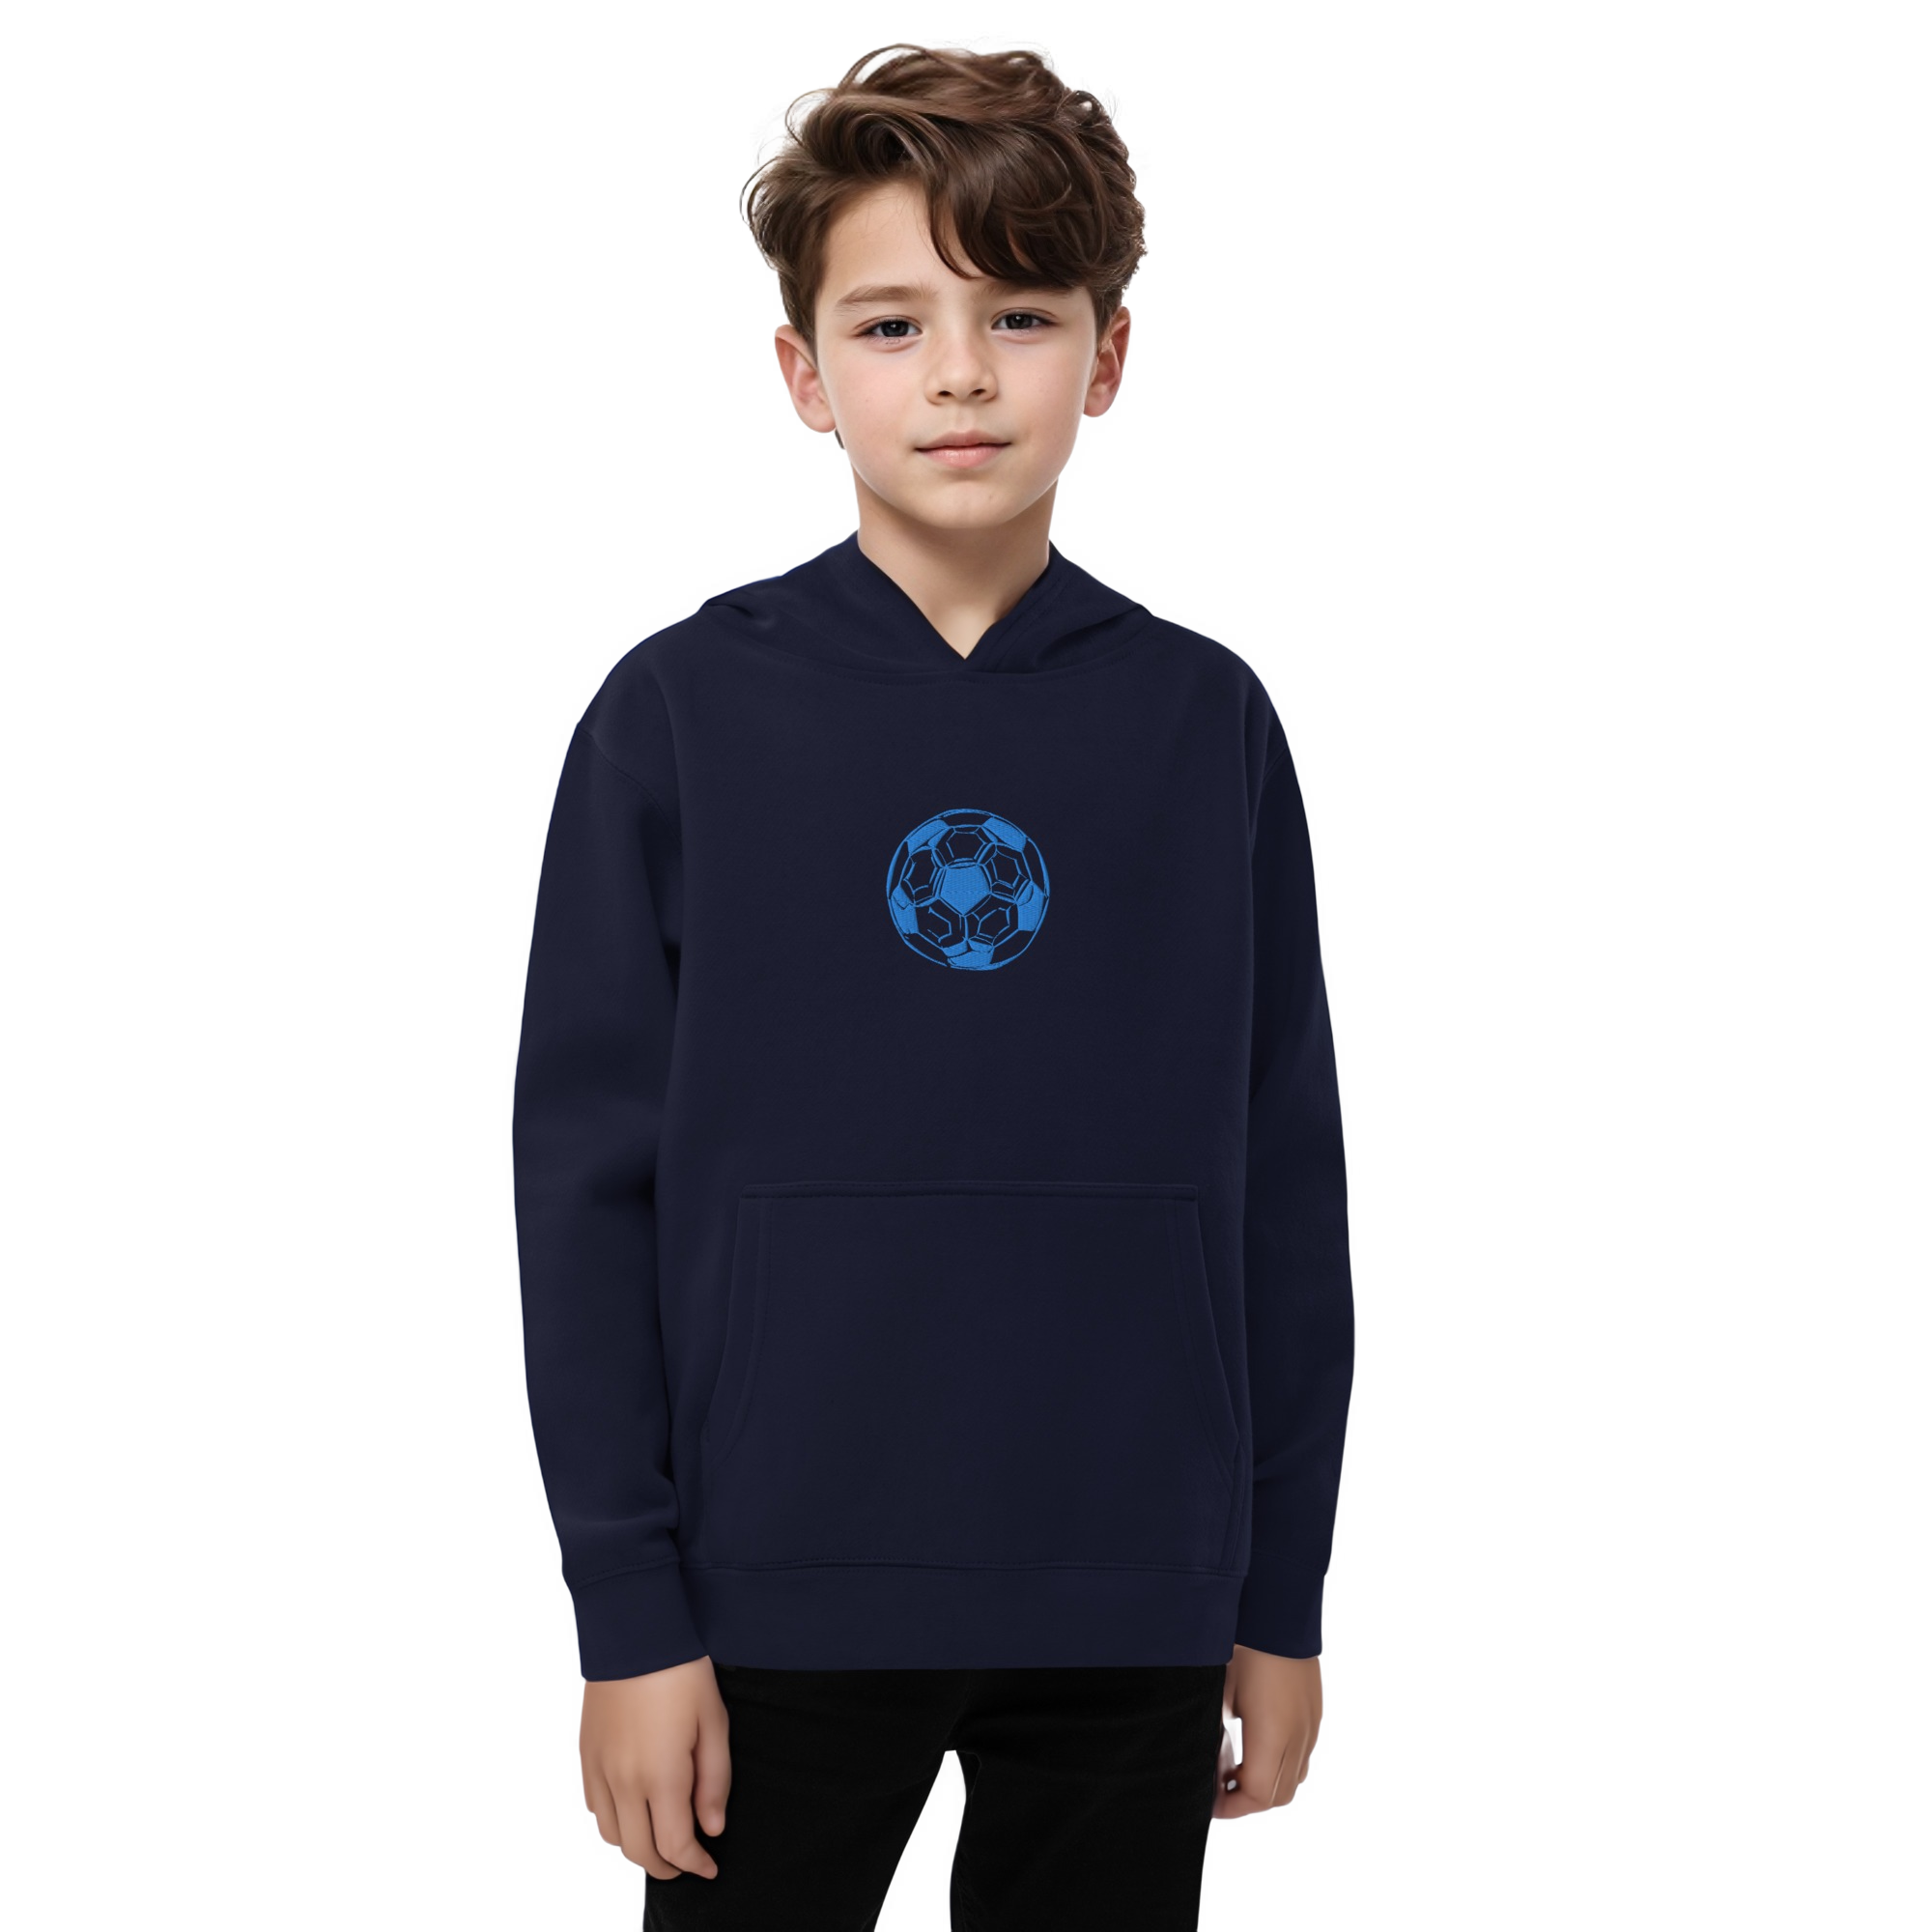 Embroidered Soccer Print Kids fleece Navy Blue hoodie